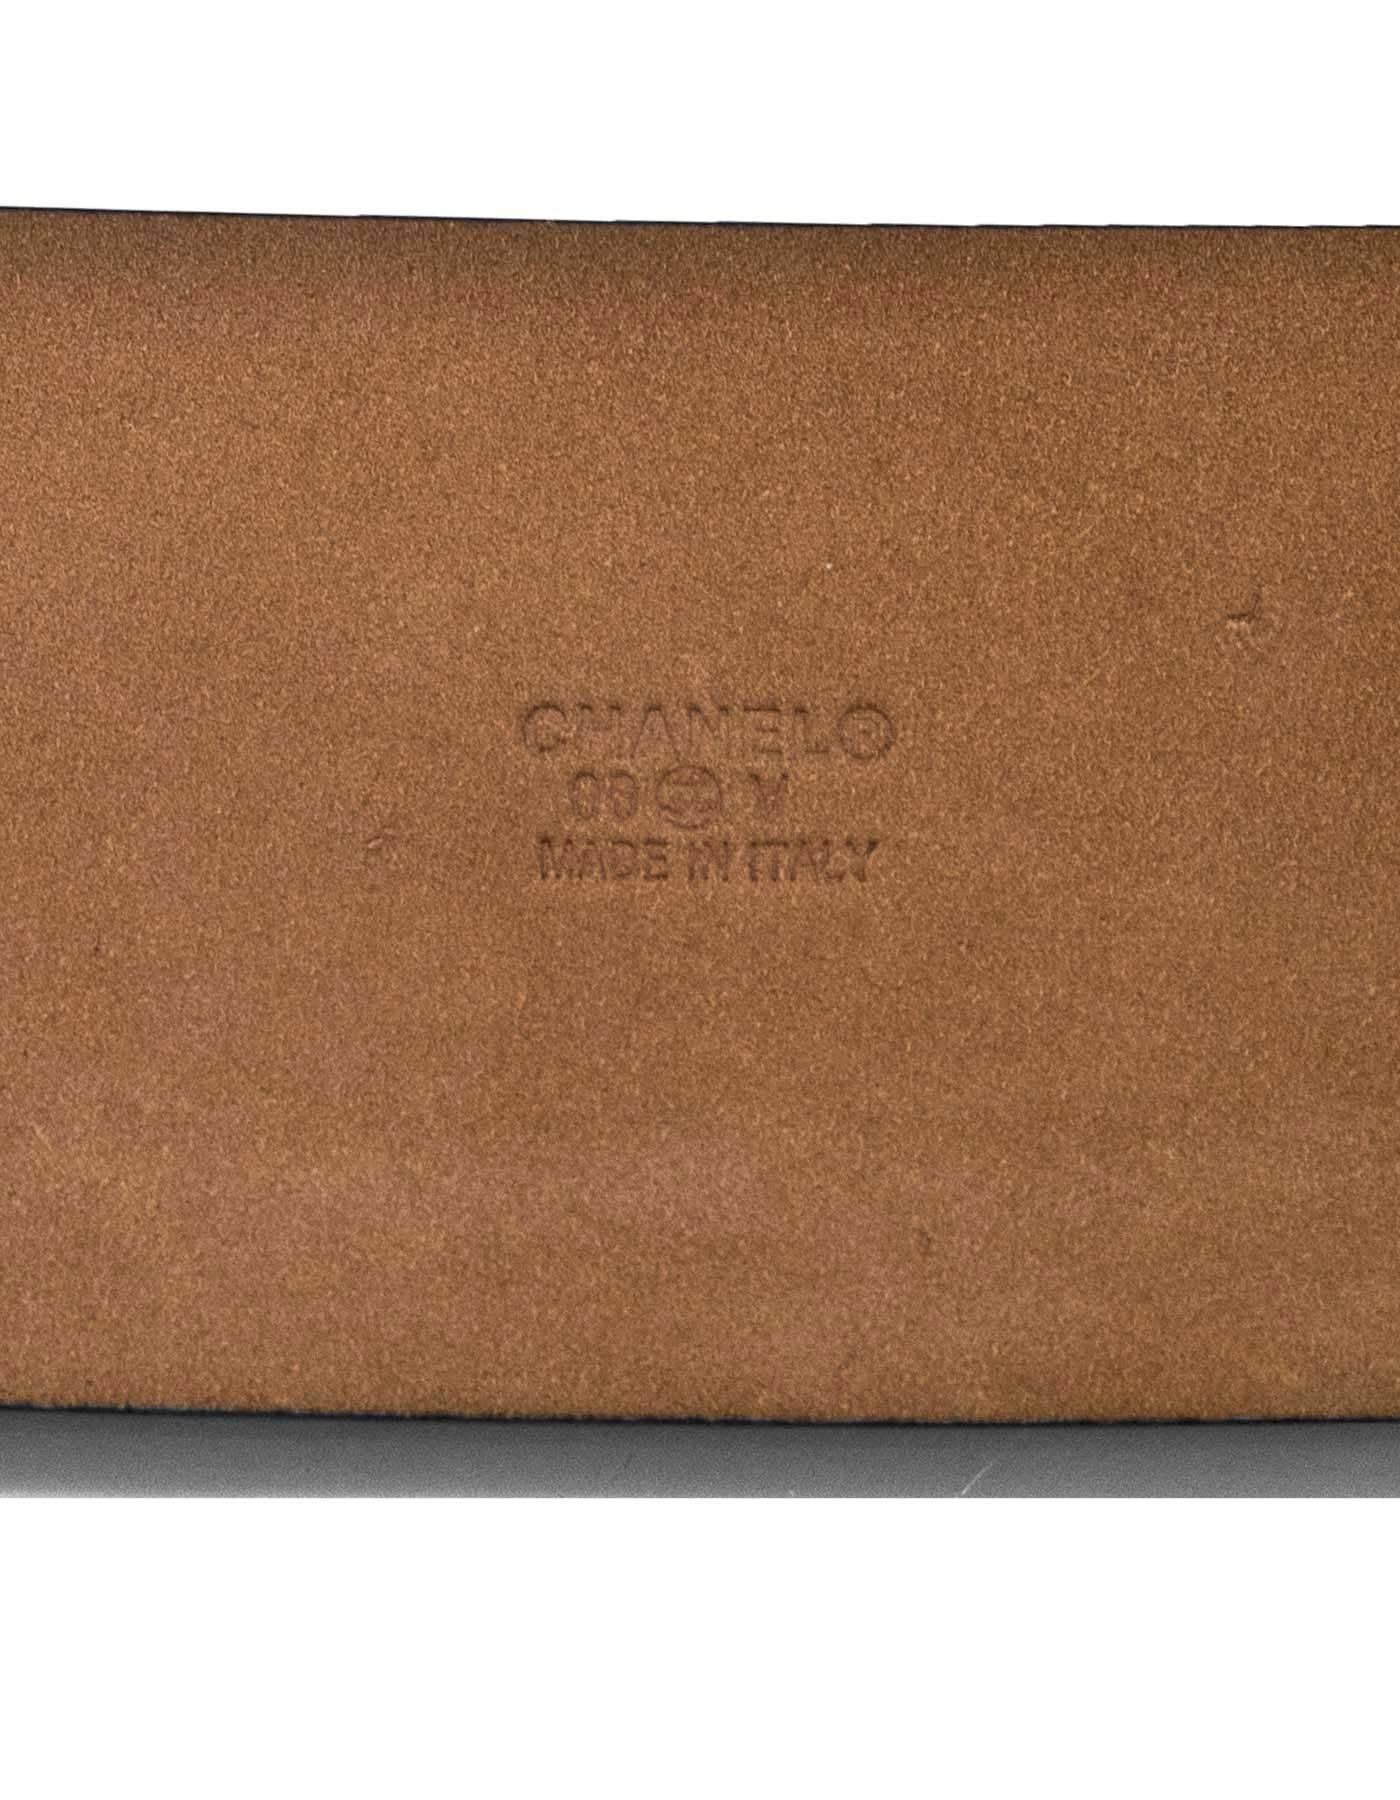 Chanel Black Leather CC Logo Belt Sz 80 3